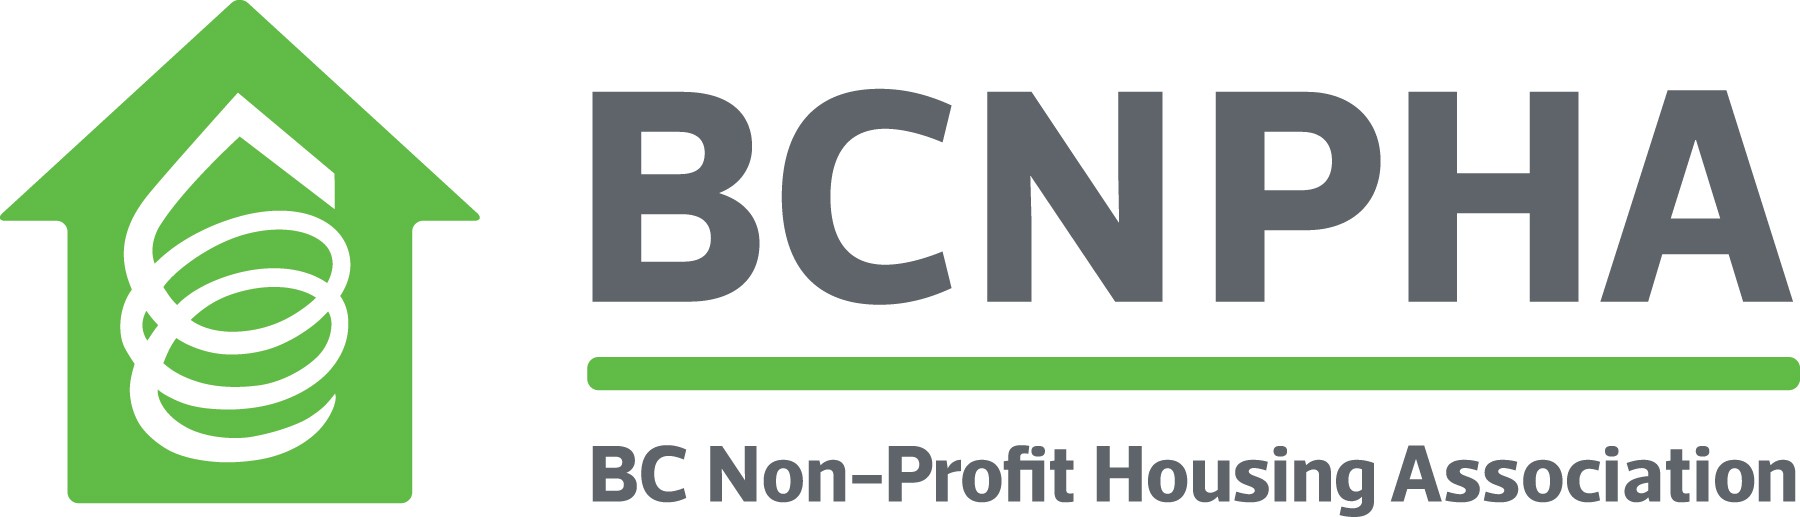 BC Non-Profit Housing Association logo